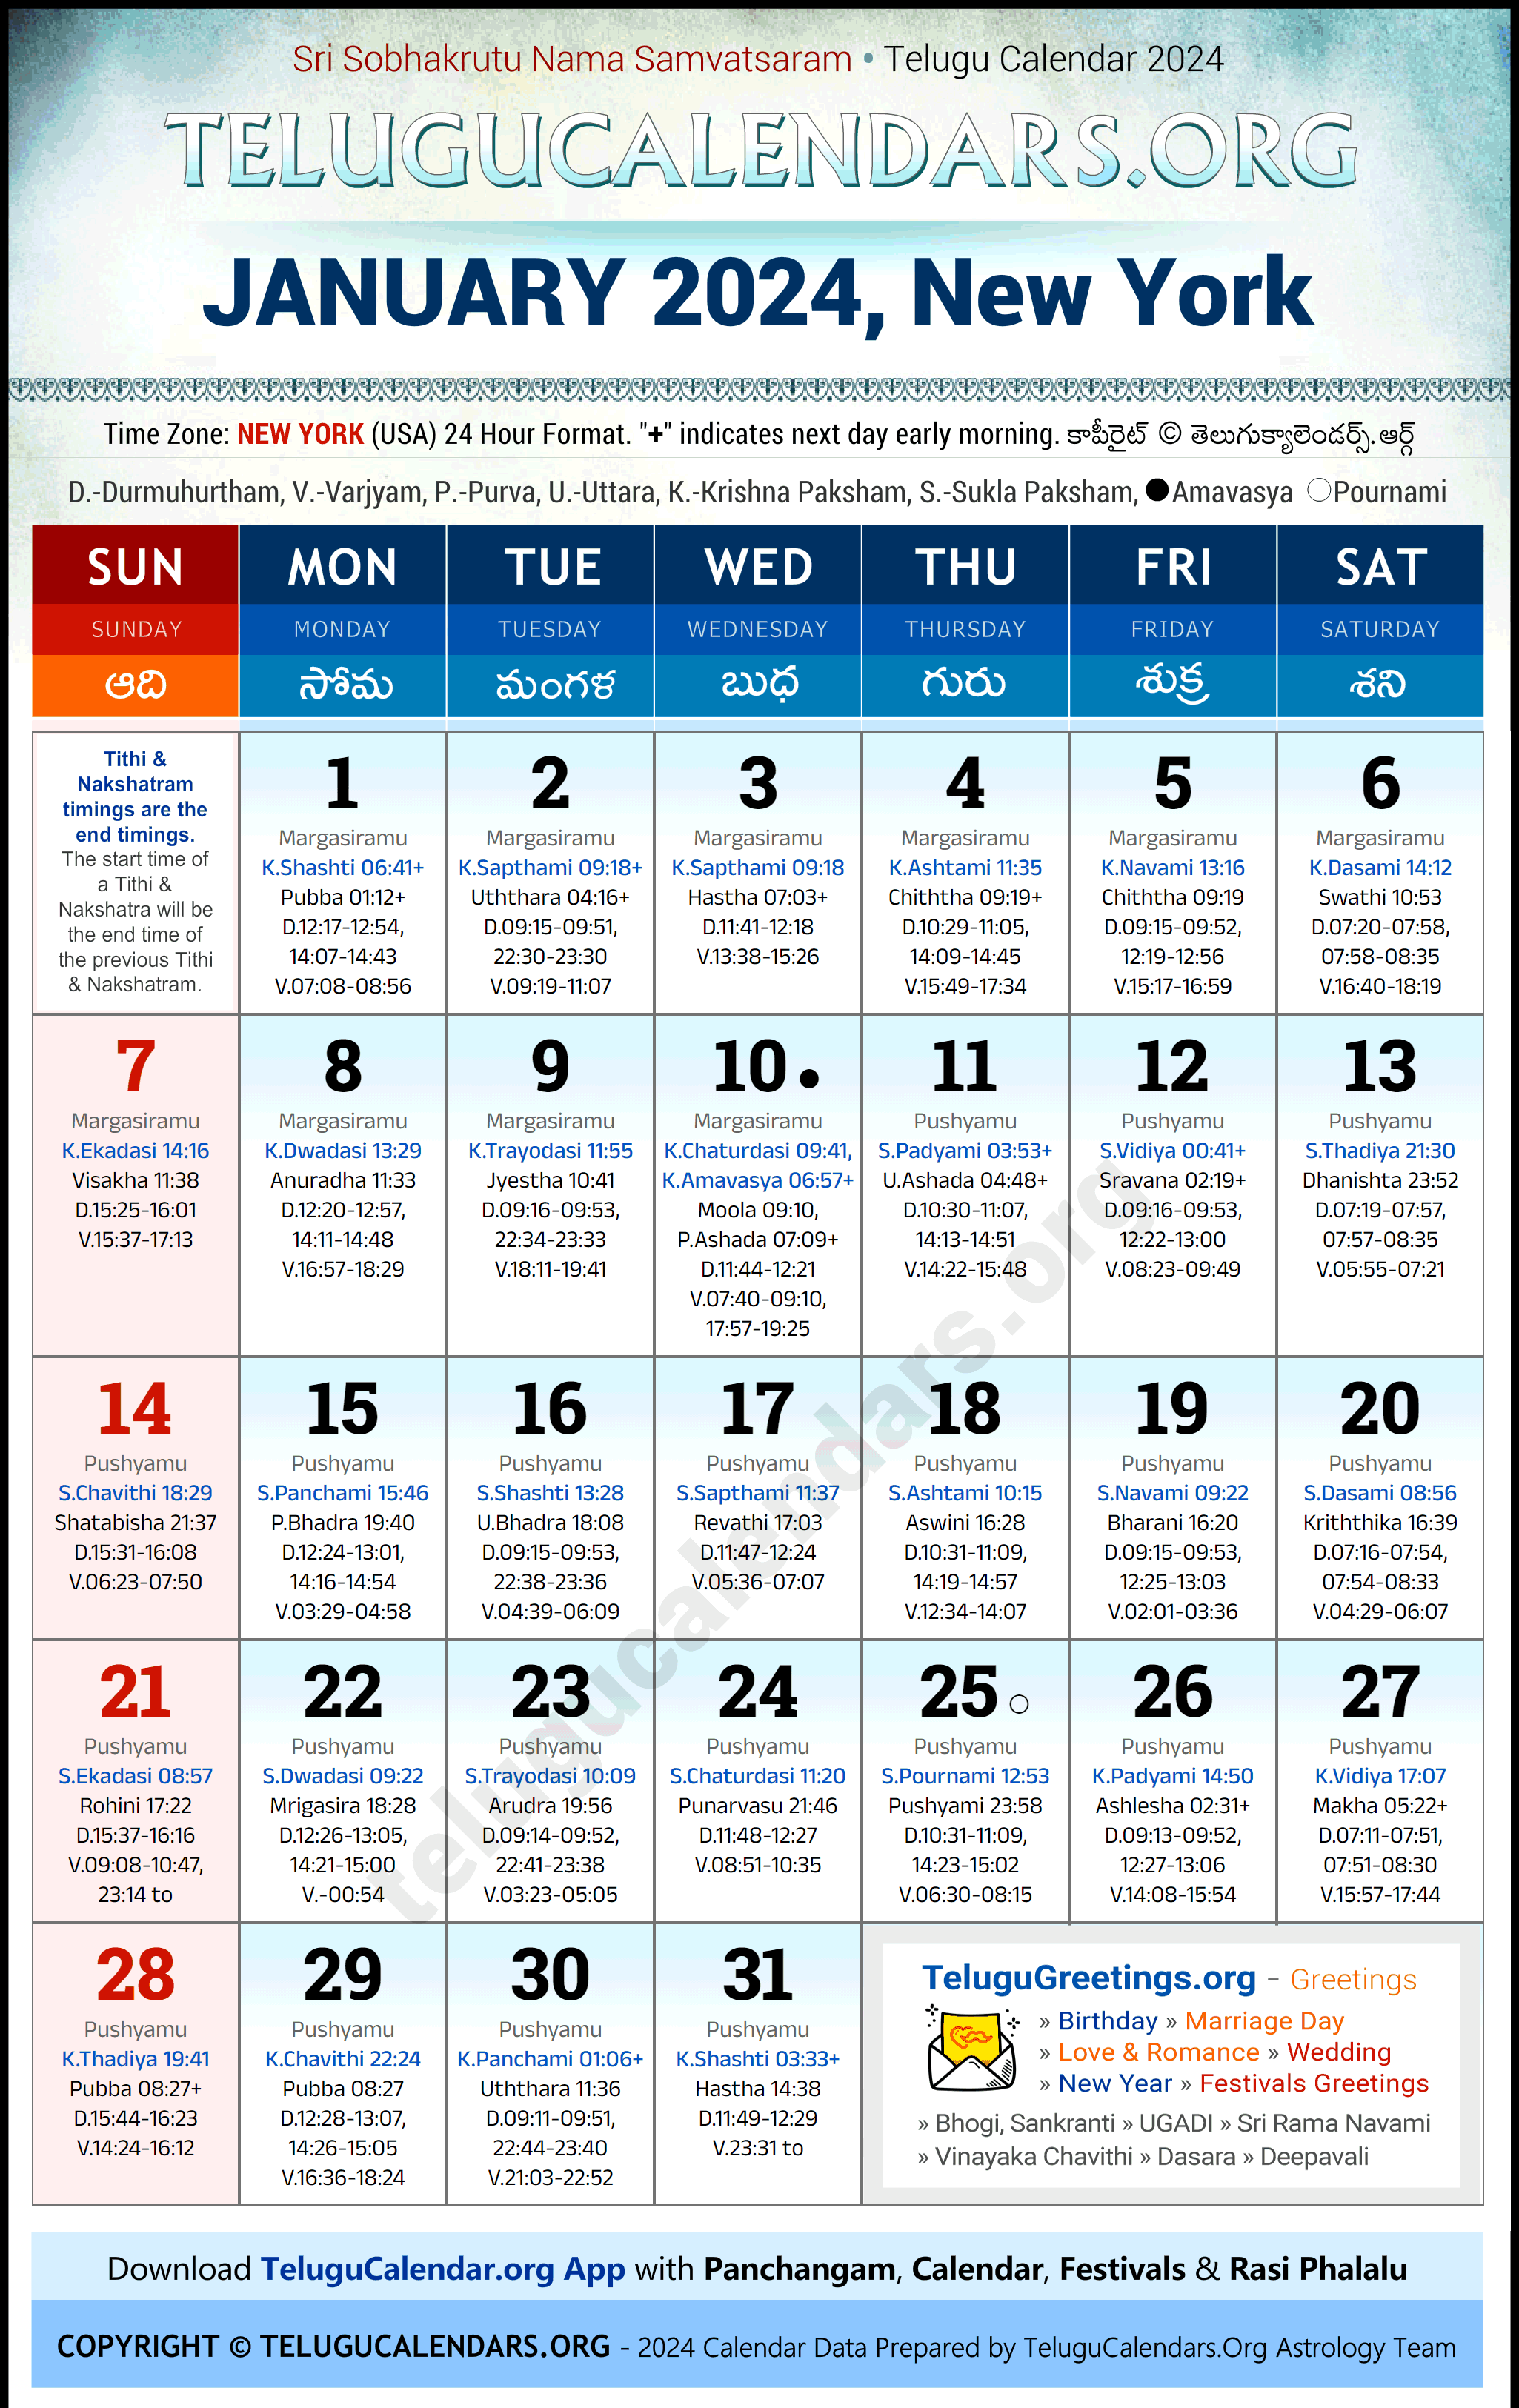 Telugu Calendar 2024 January Festivals for New York